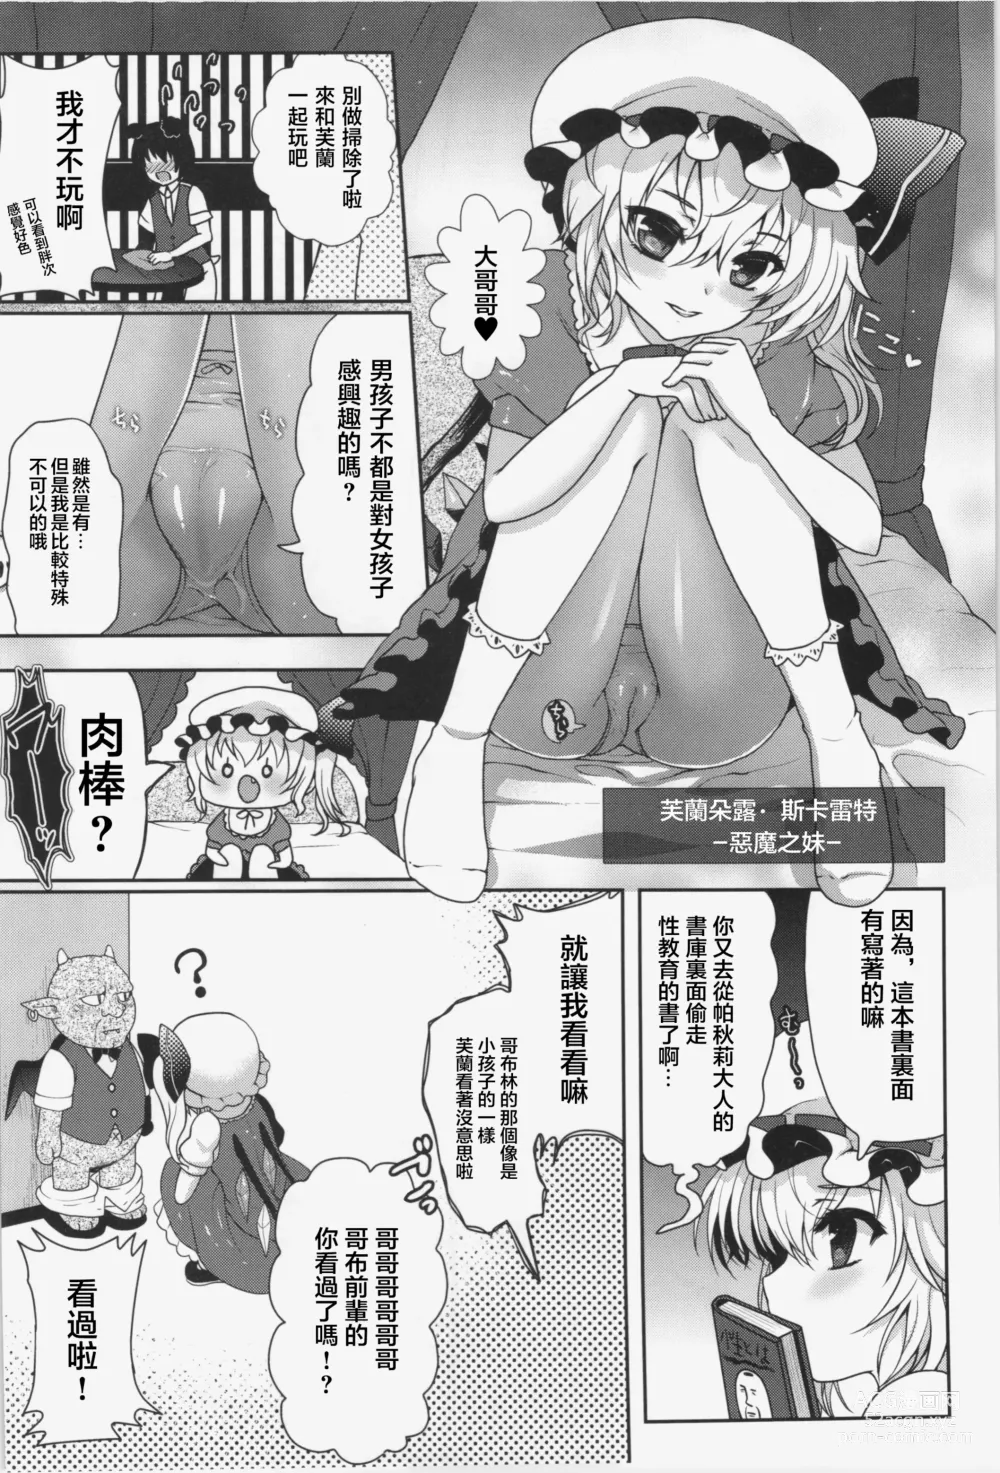 Page 5 of doujinshi concern